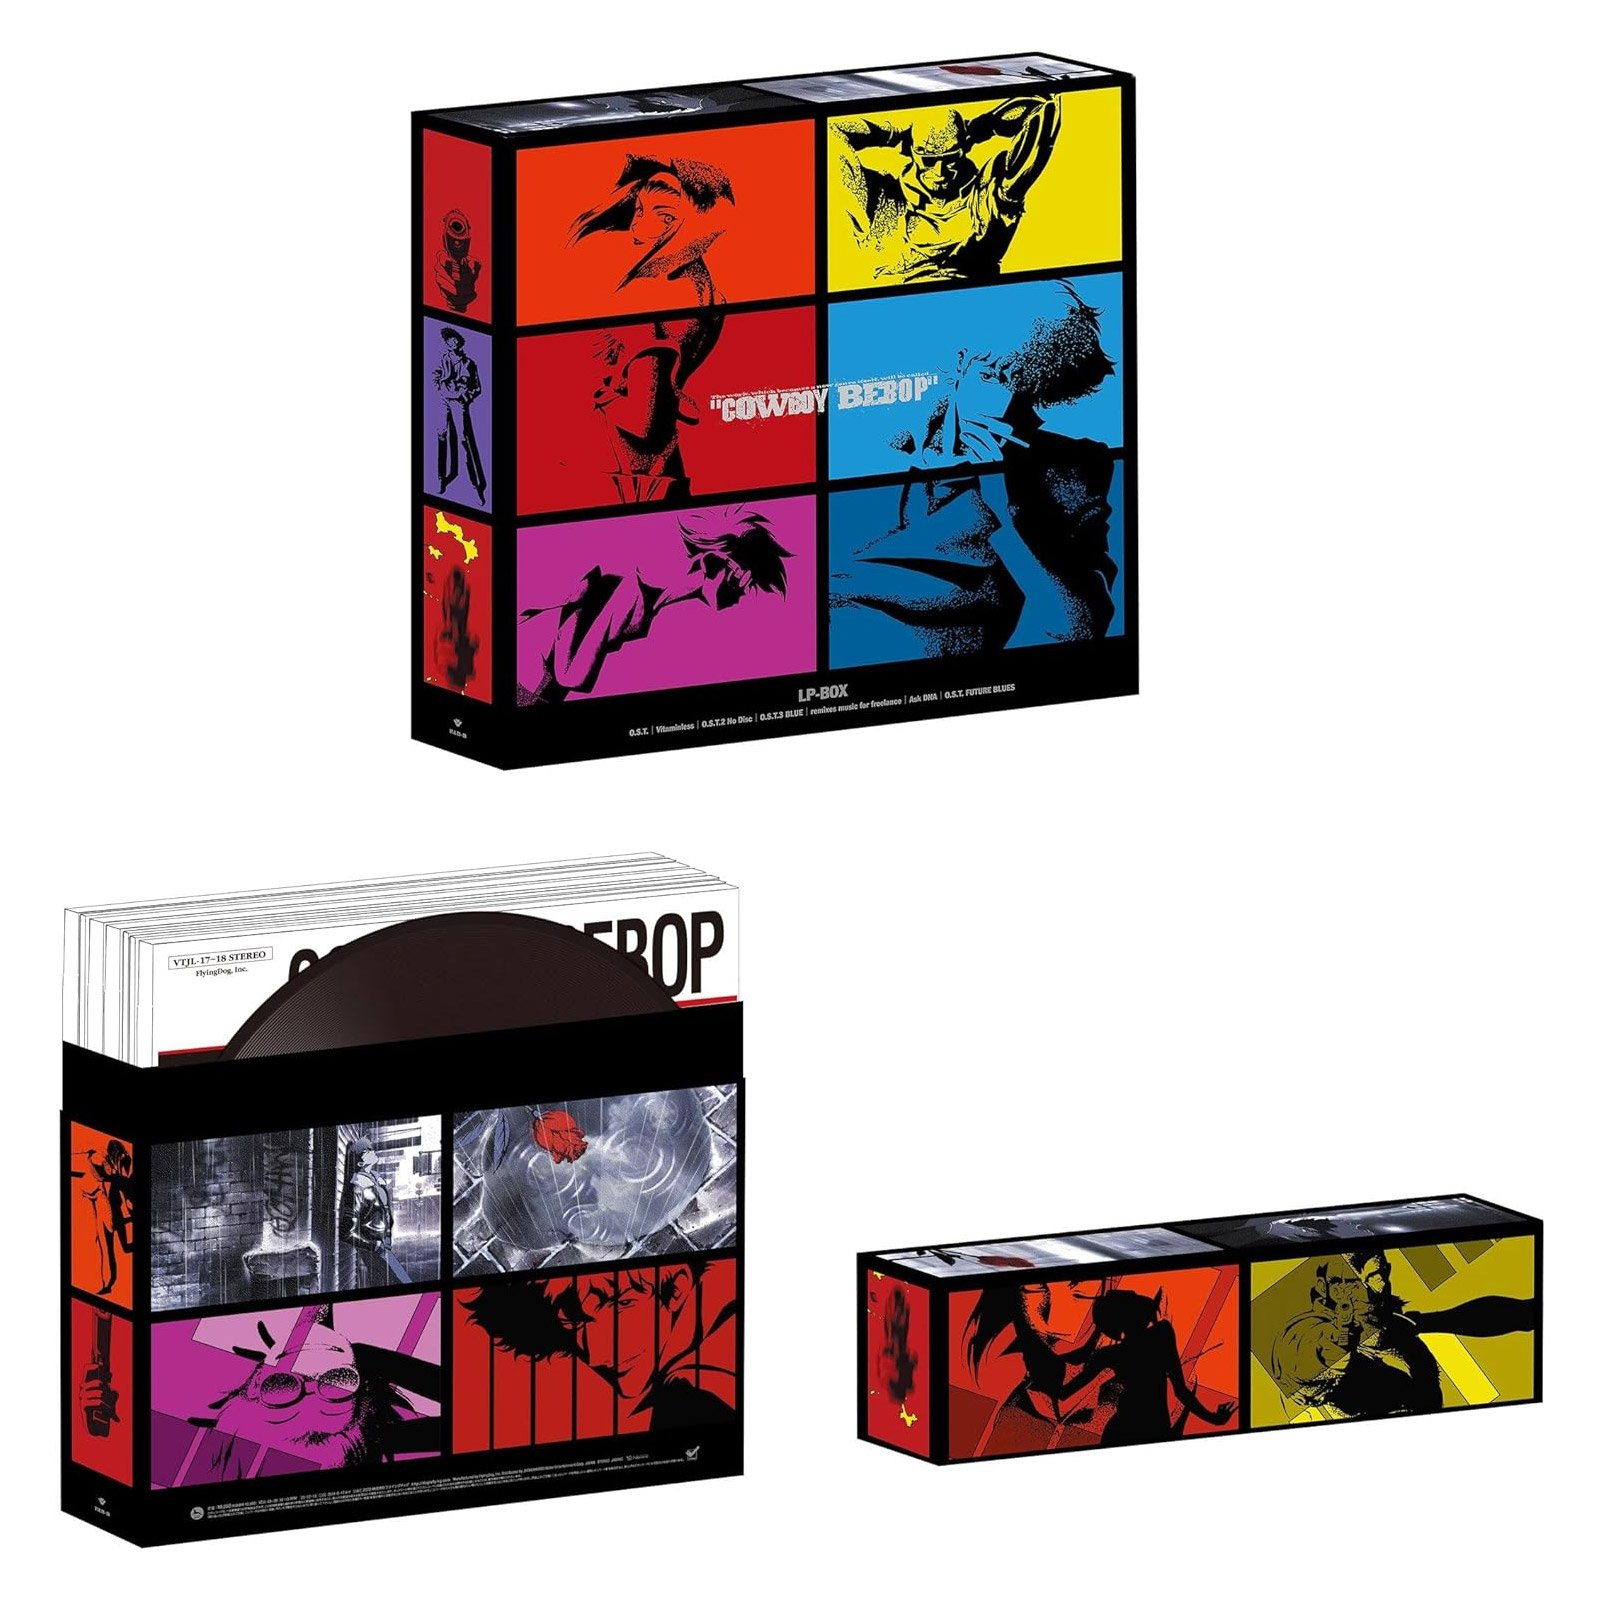 Cowboy Bebop Limited 25th Anniversary Box Set edition